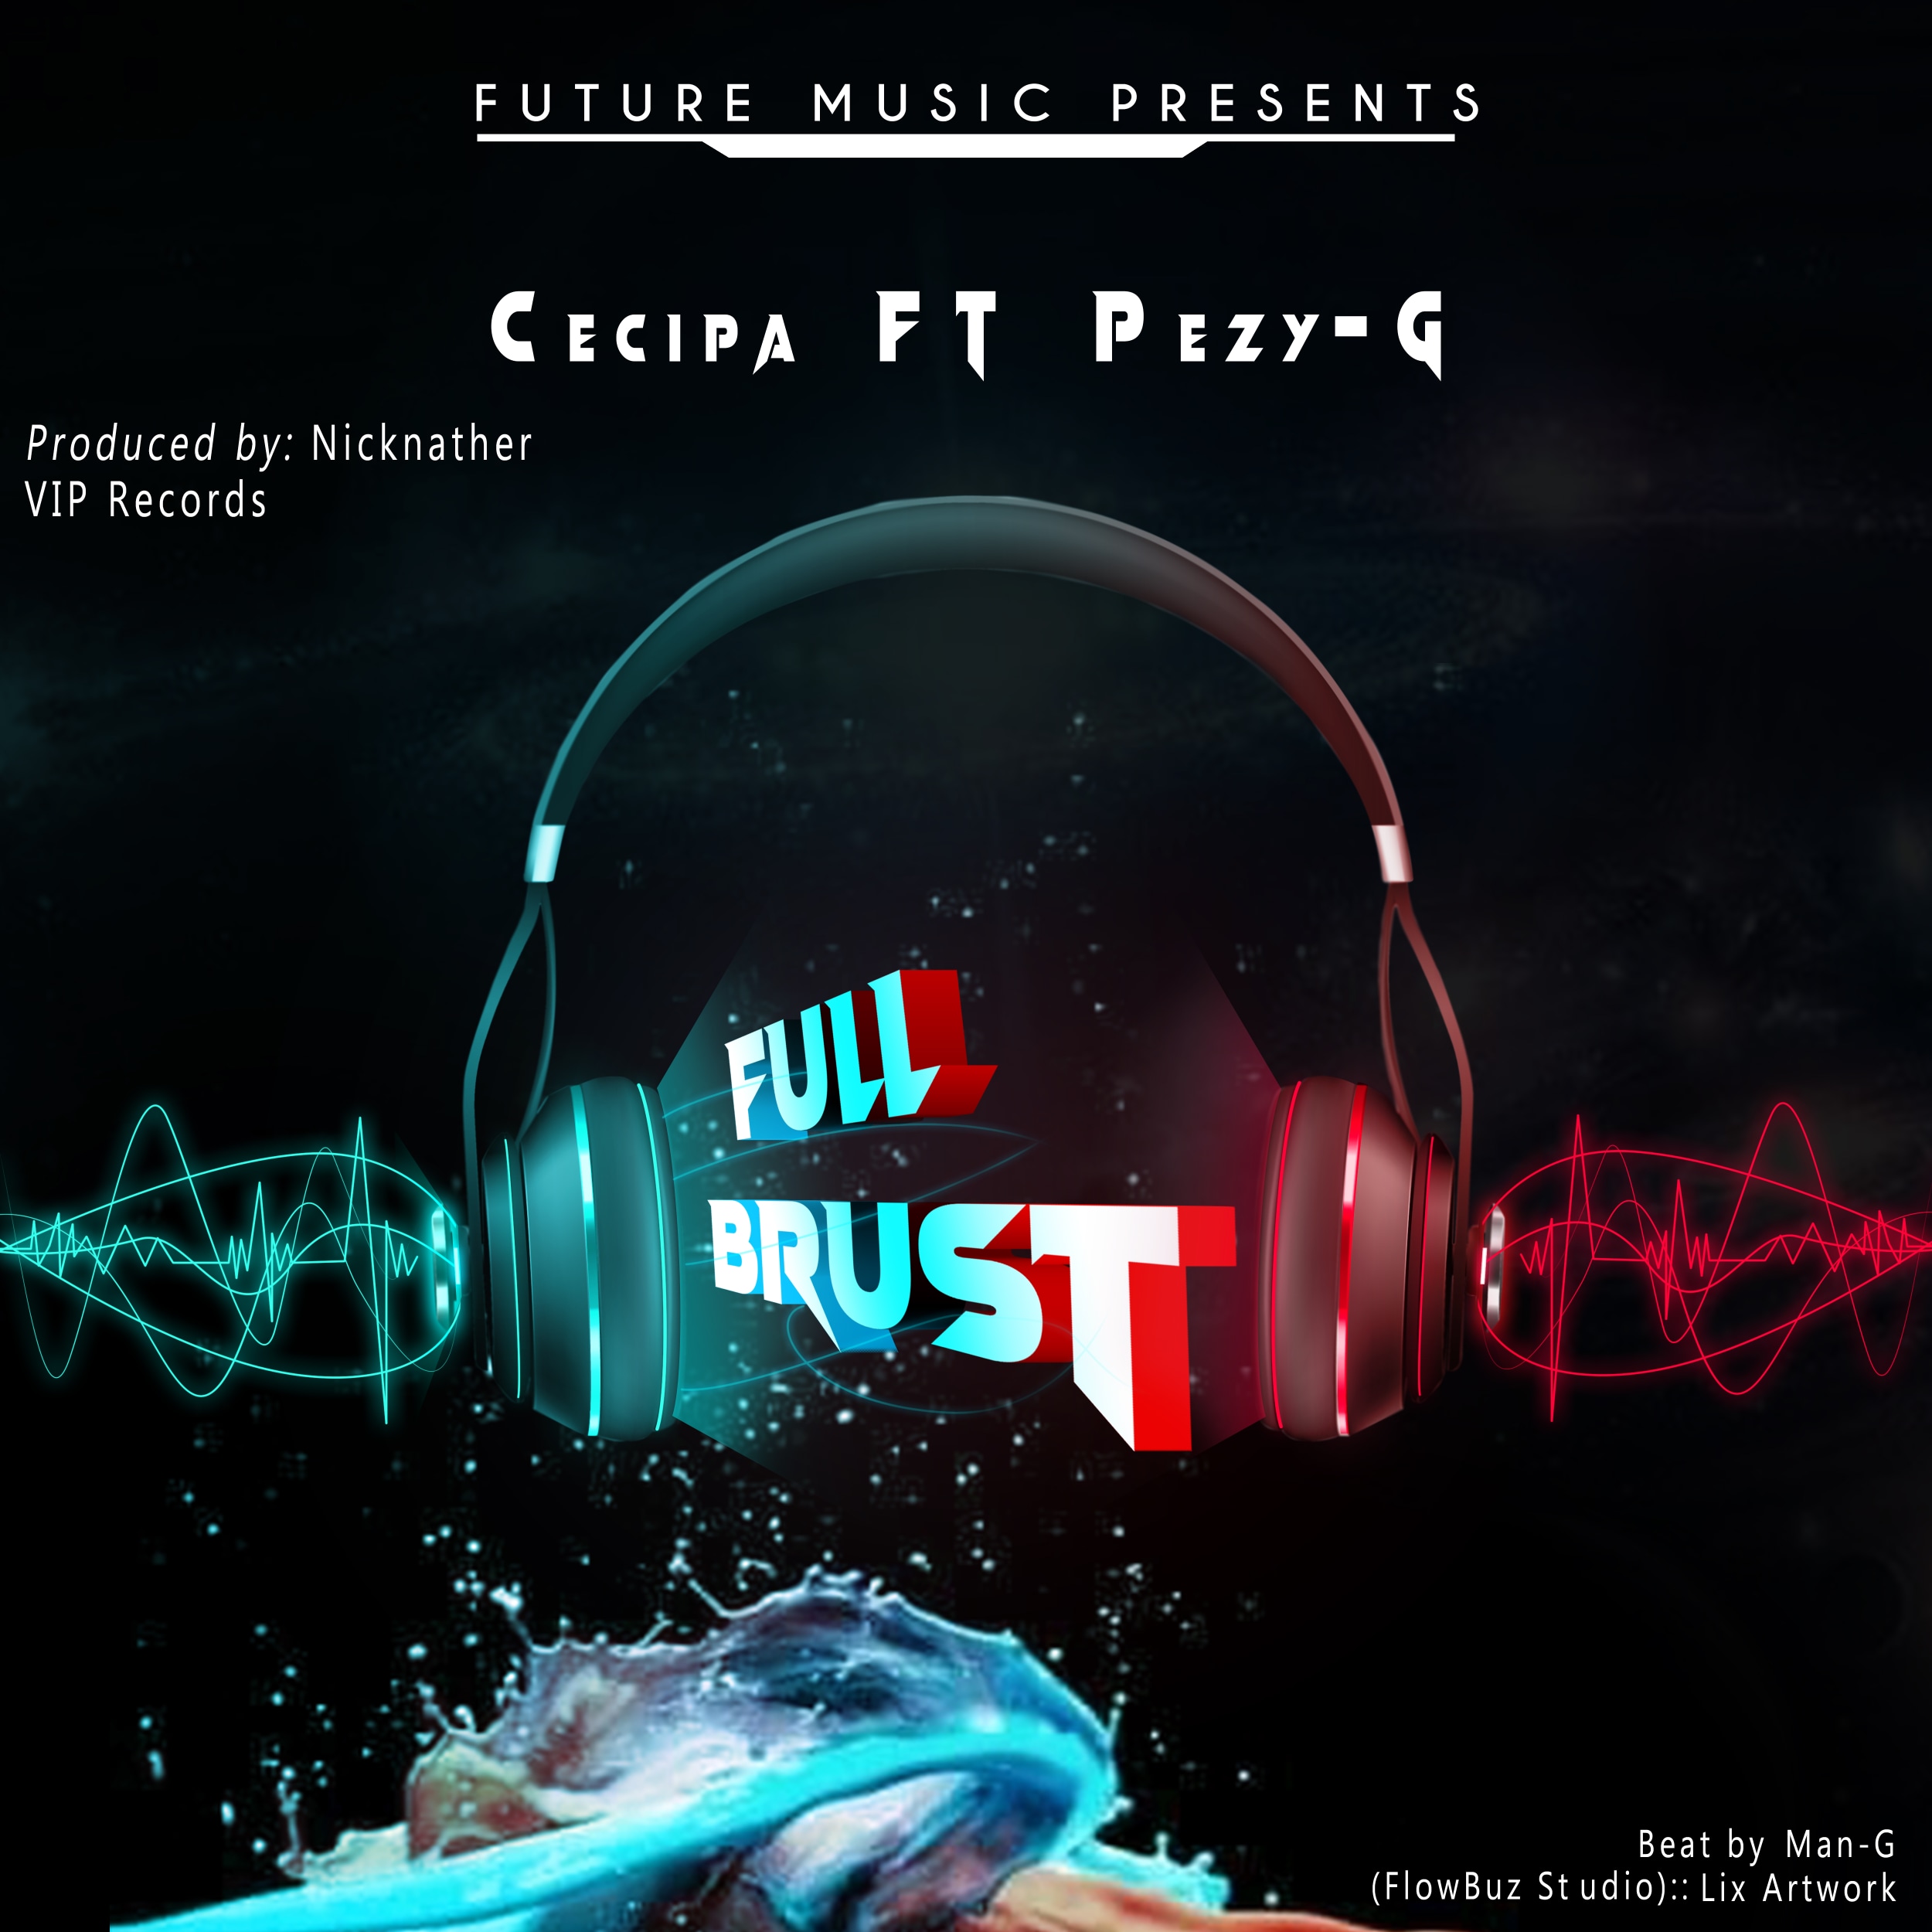  Cecipa ft Pezy G Full Brust Prod VIP record (Nicknather) Beat by Man G